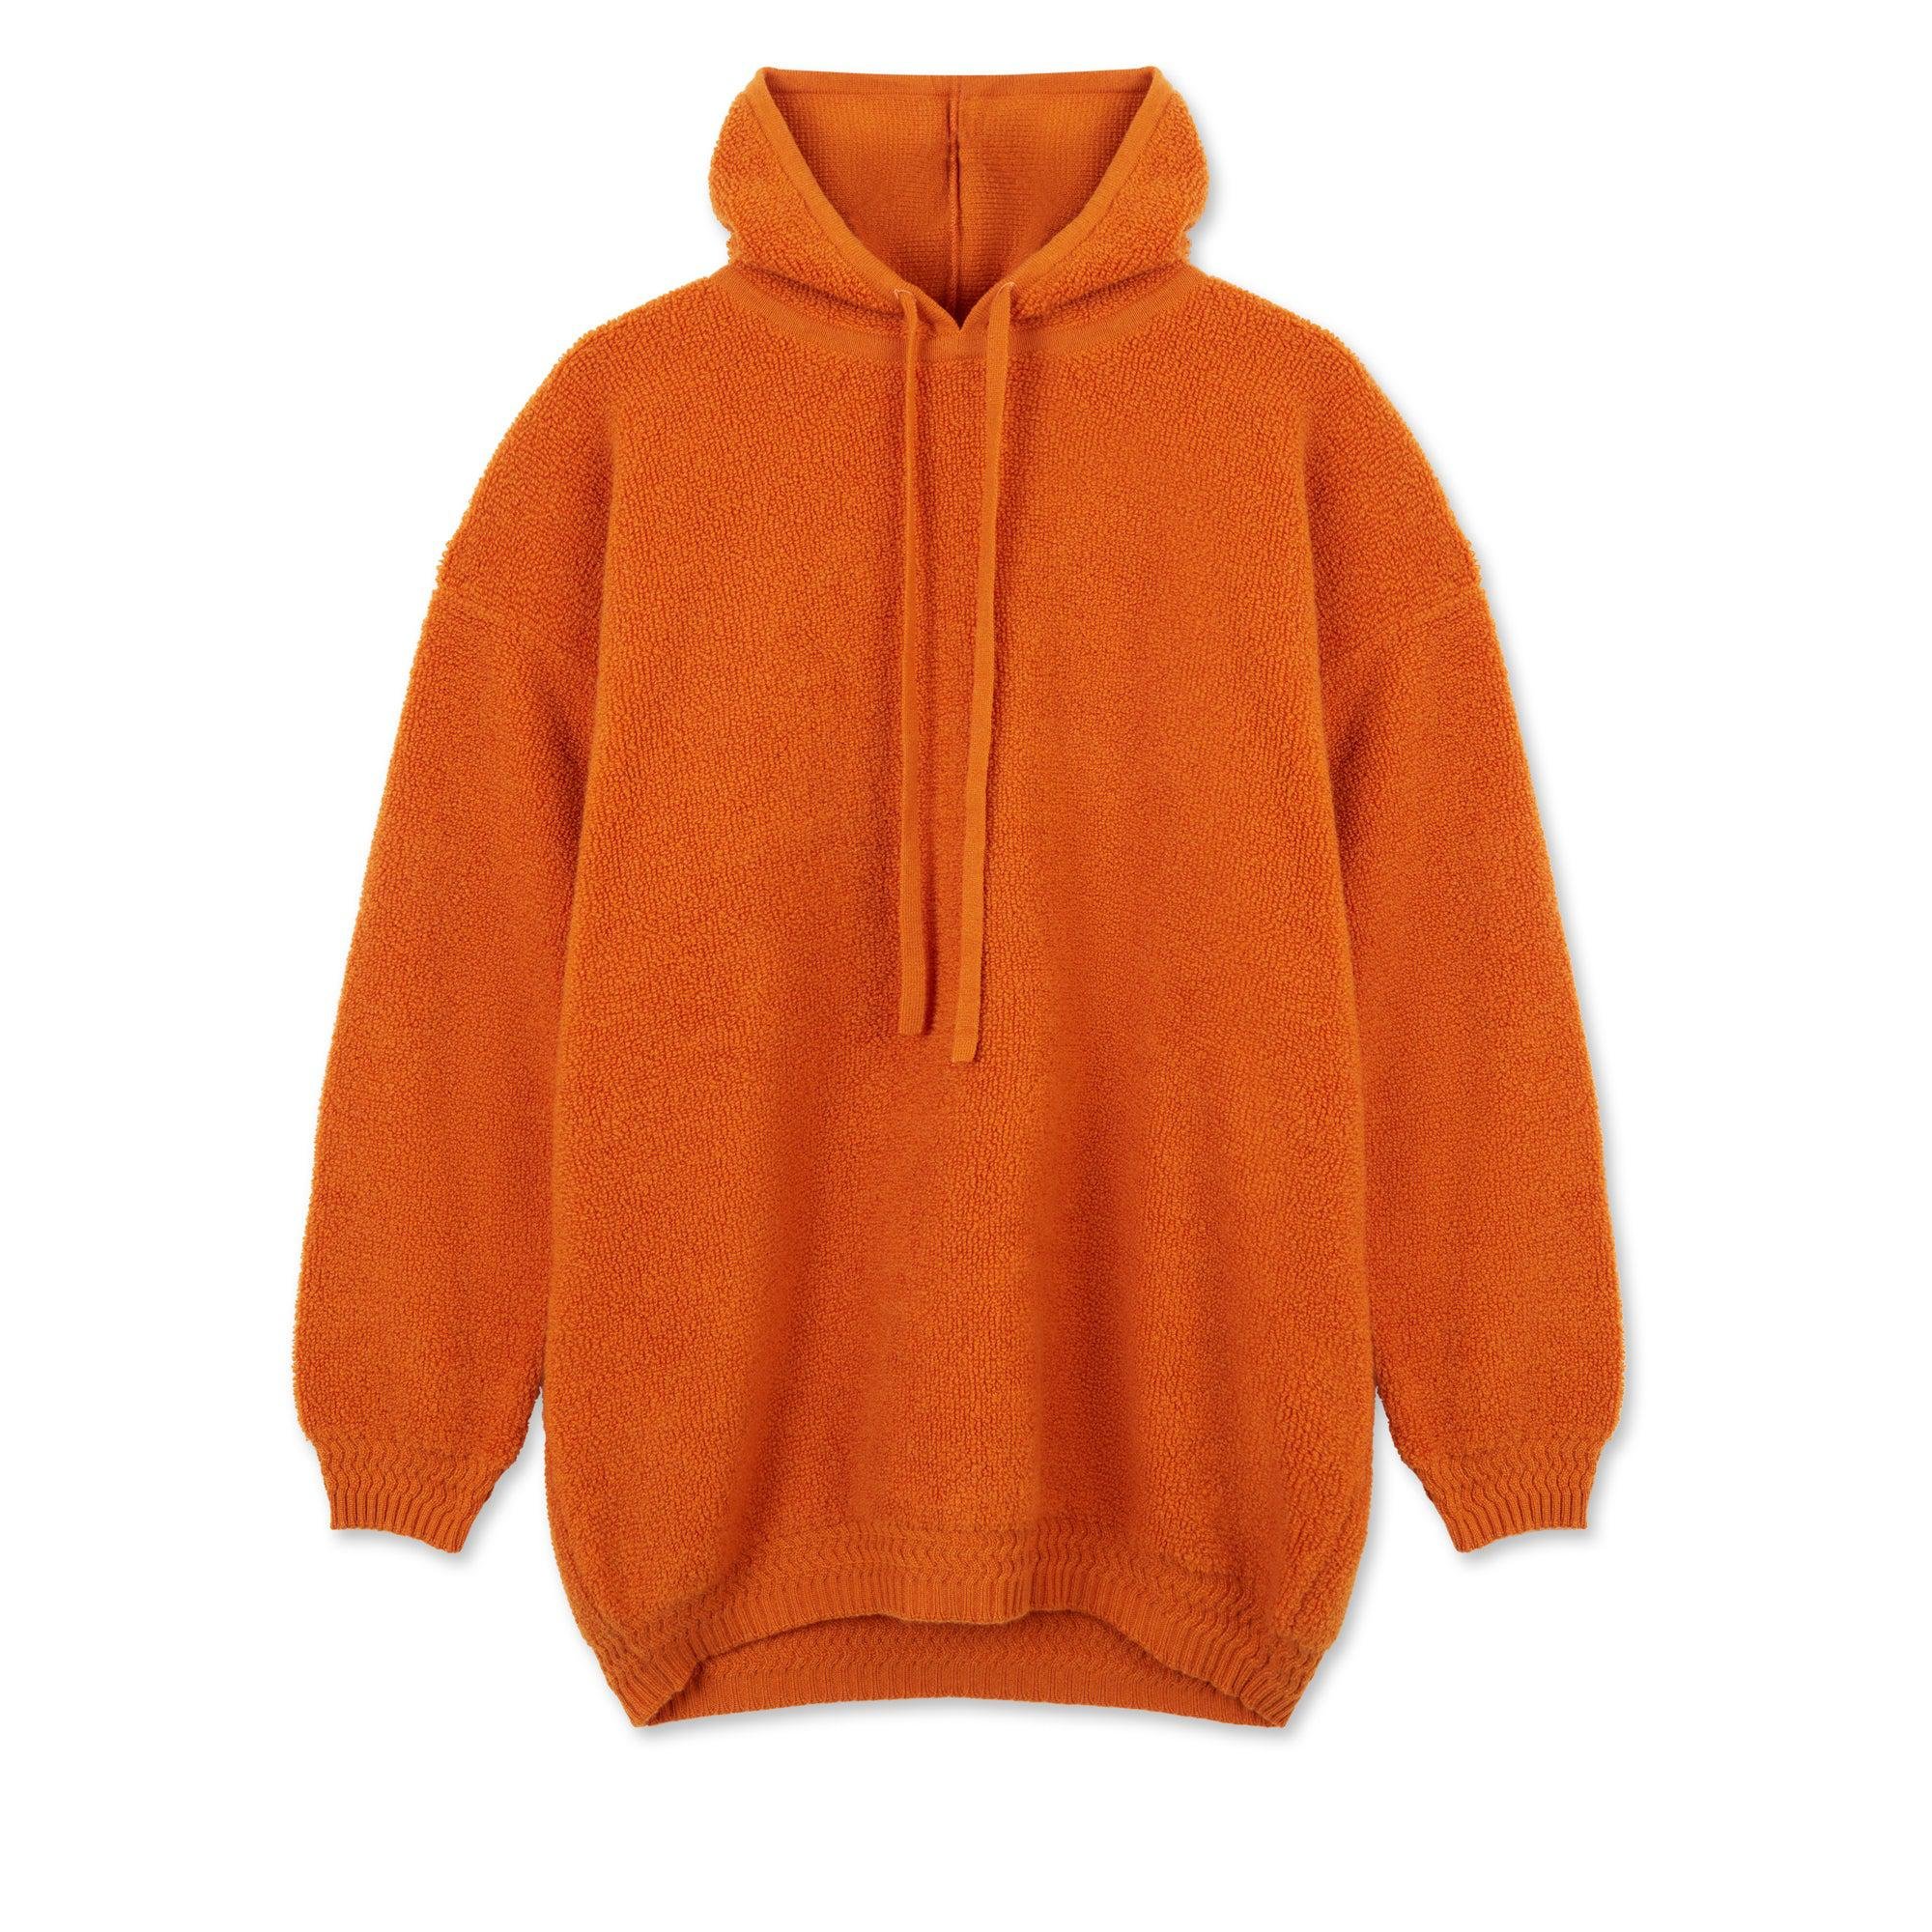 3Man - Men’s Cashmere Fleece Hoodie - (Orange) by 3MAN